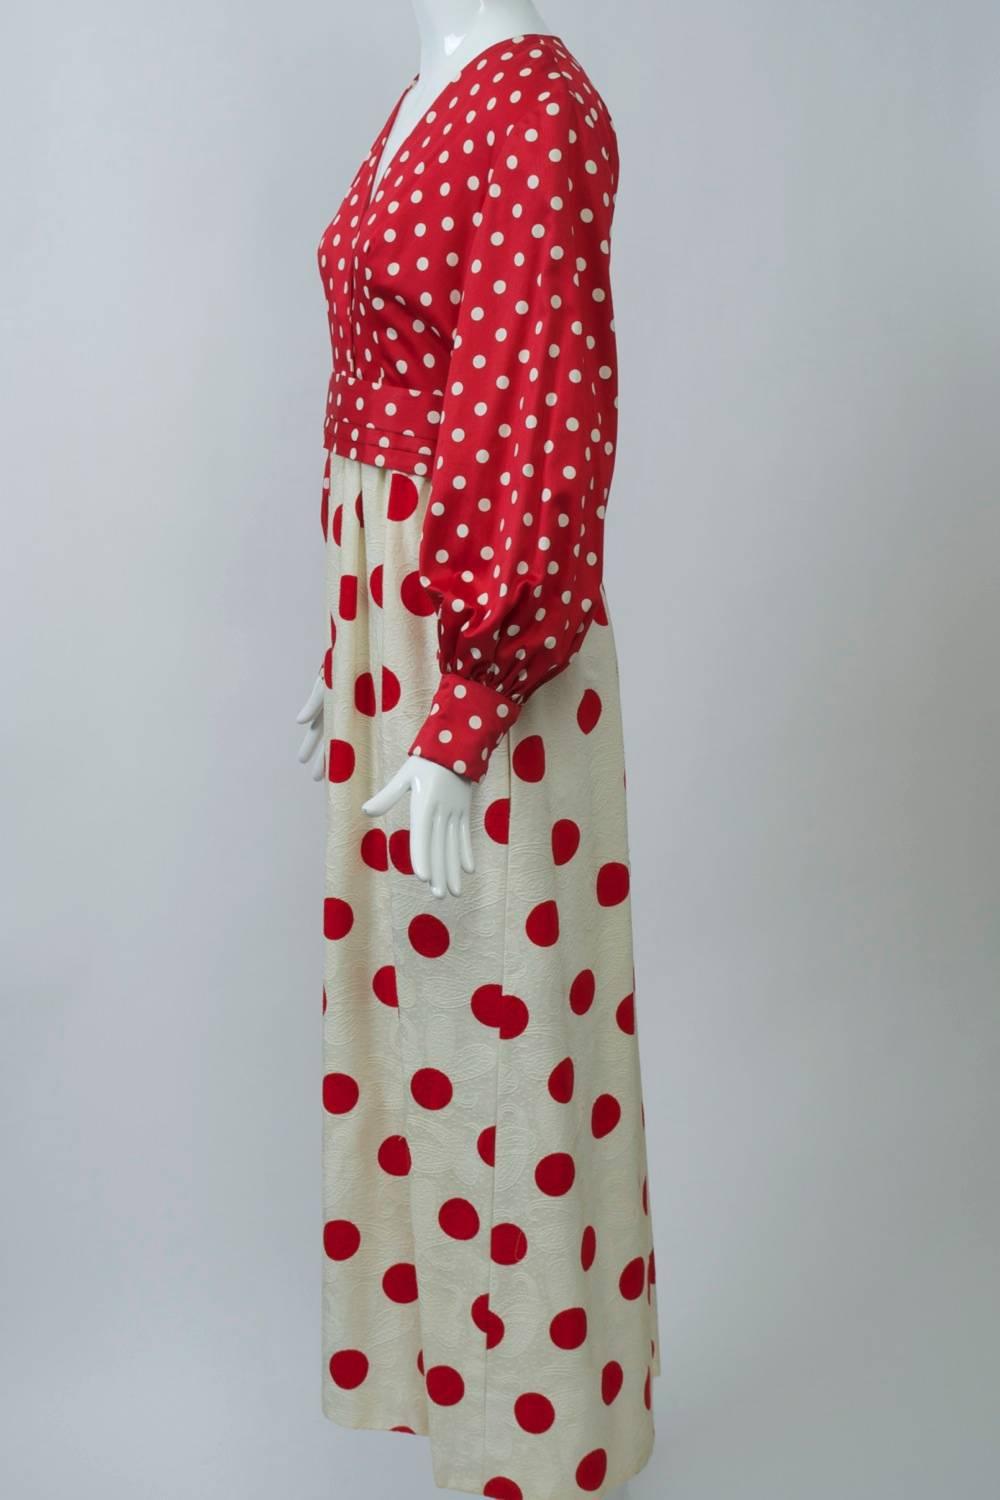 70s polka dot dress